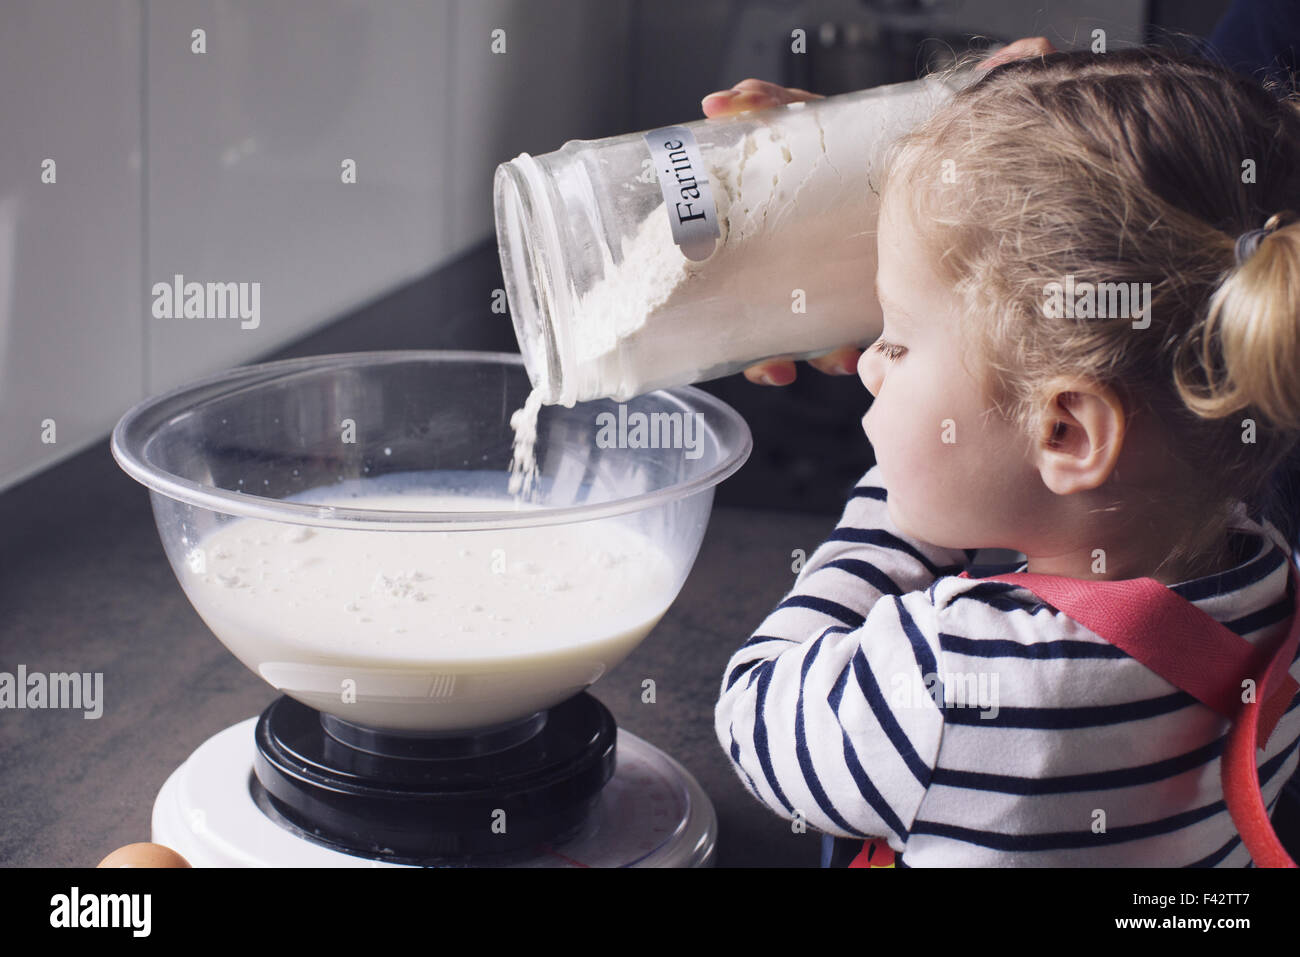 Little girl pouring flour into mixing bowl Stock Photo